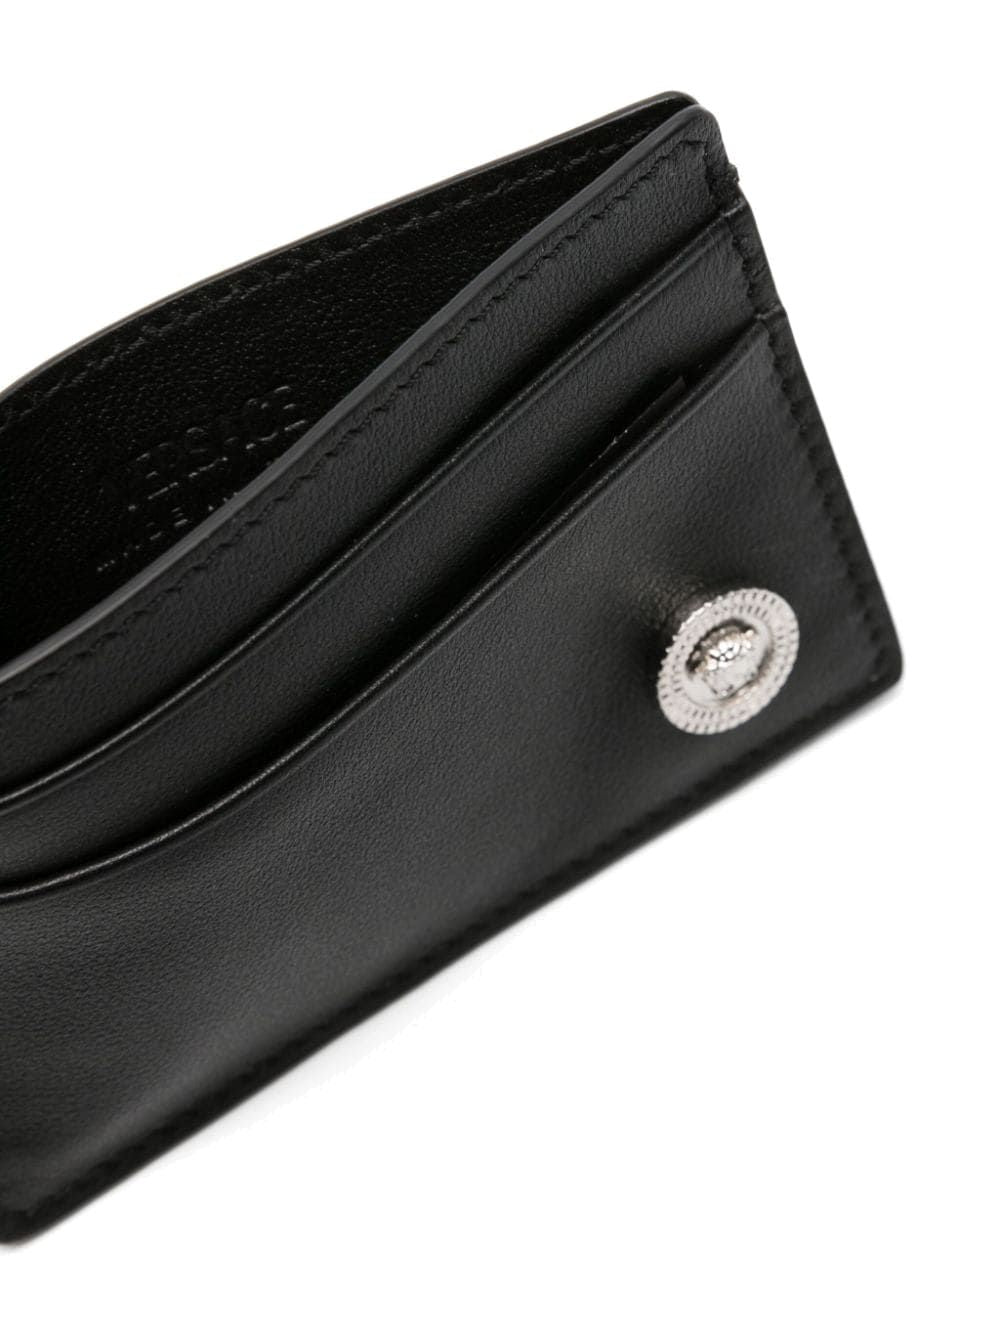 Versace Wallet Black-Palladium